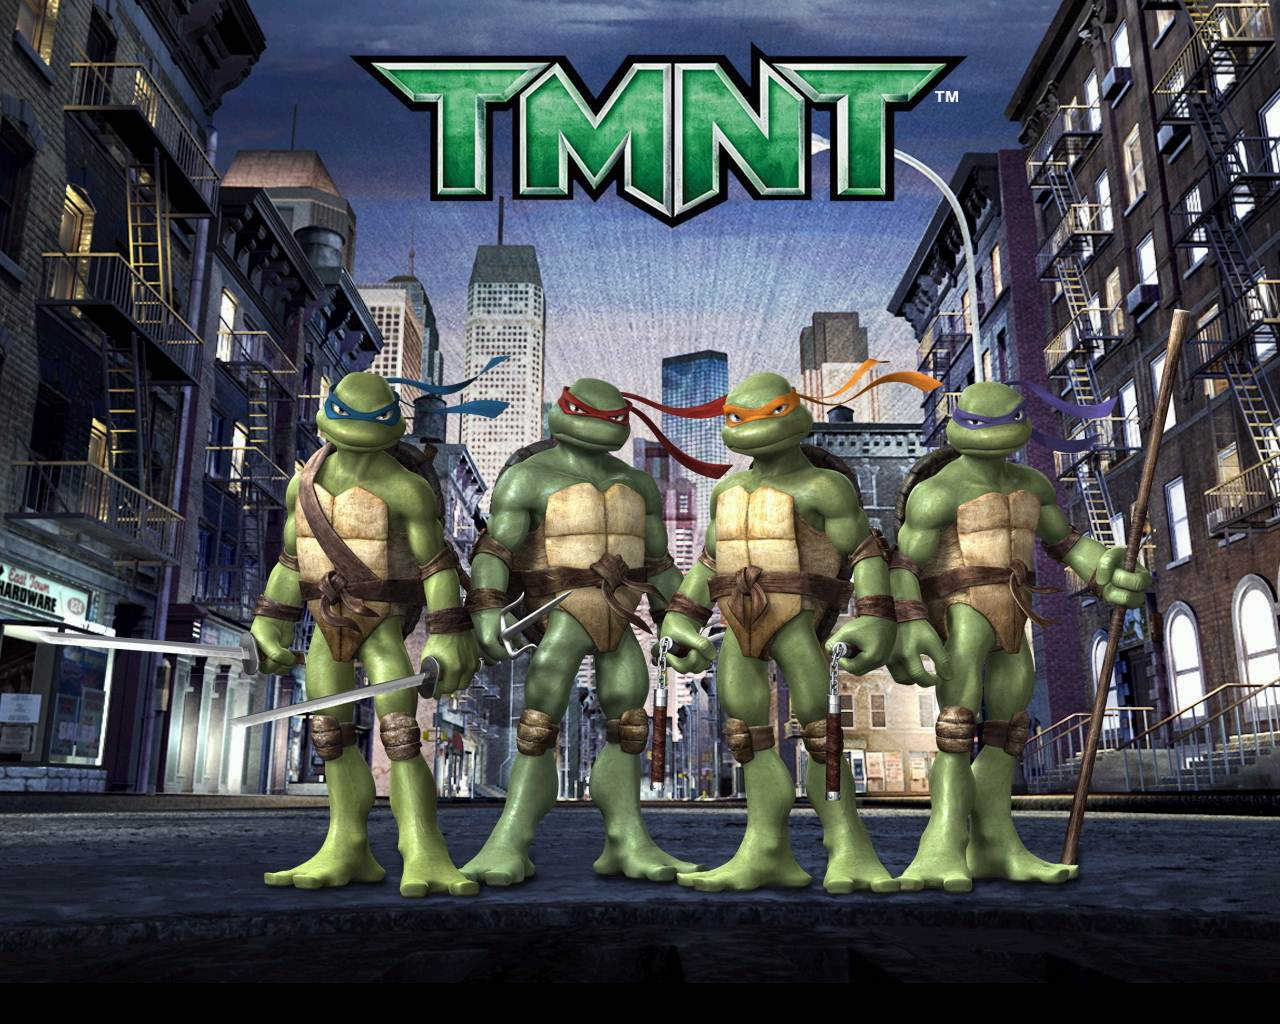 Teenage Mutant Ninja Turtles Wallpaper HD